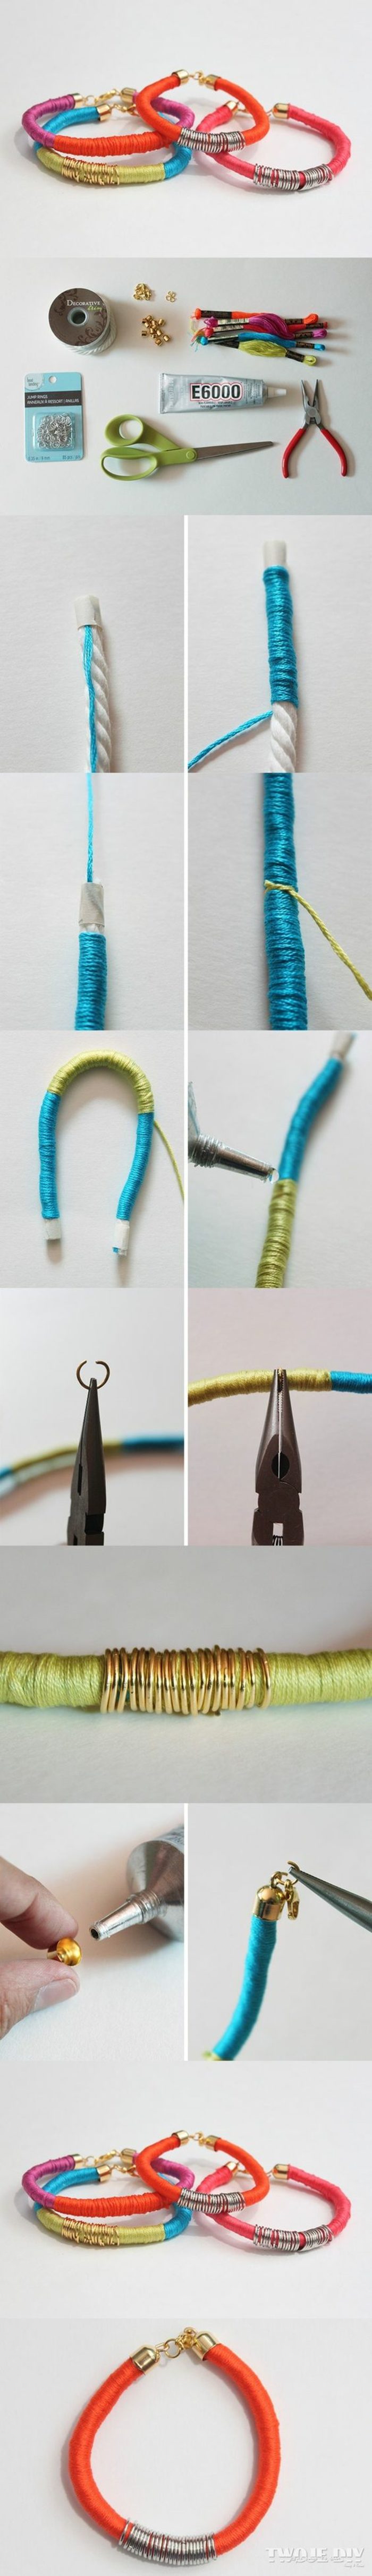 pulseras-de-macrame-diferentes-colores-como-hacer-pulseras-de-macrame-paso-a-paso-simple-y-elegante